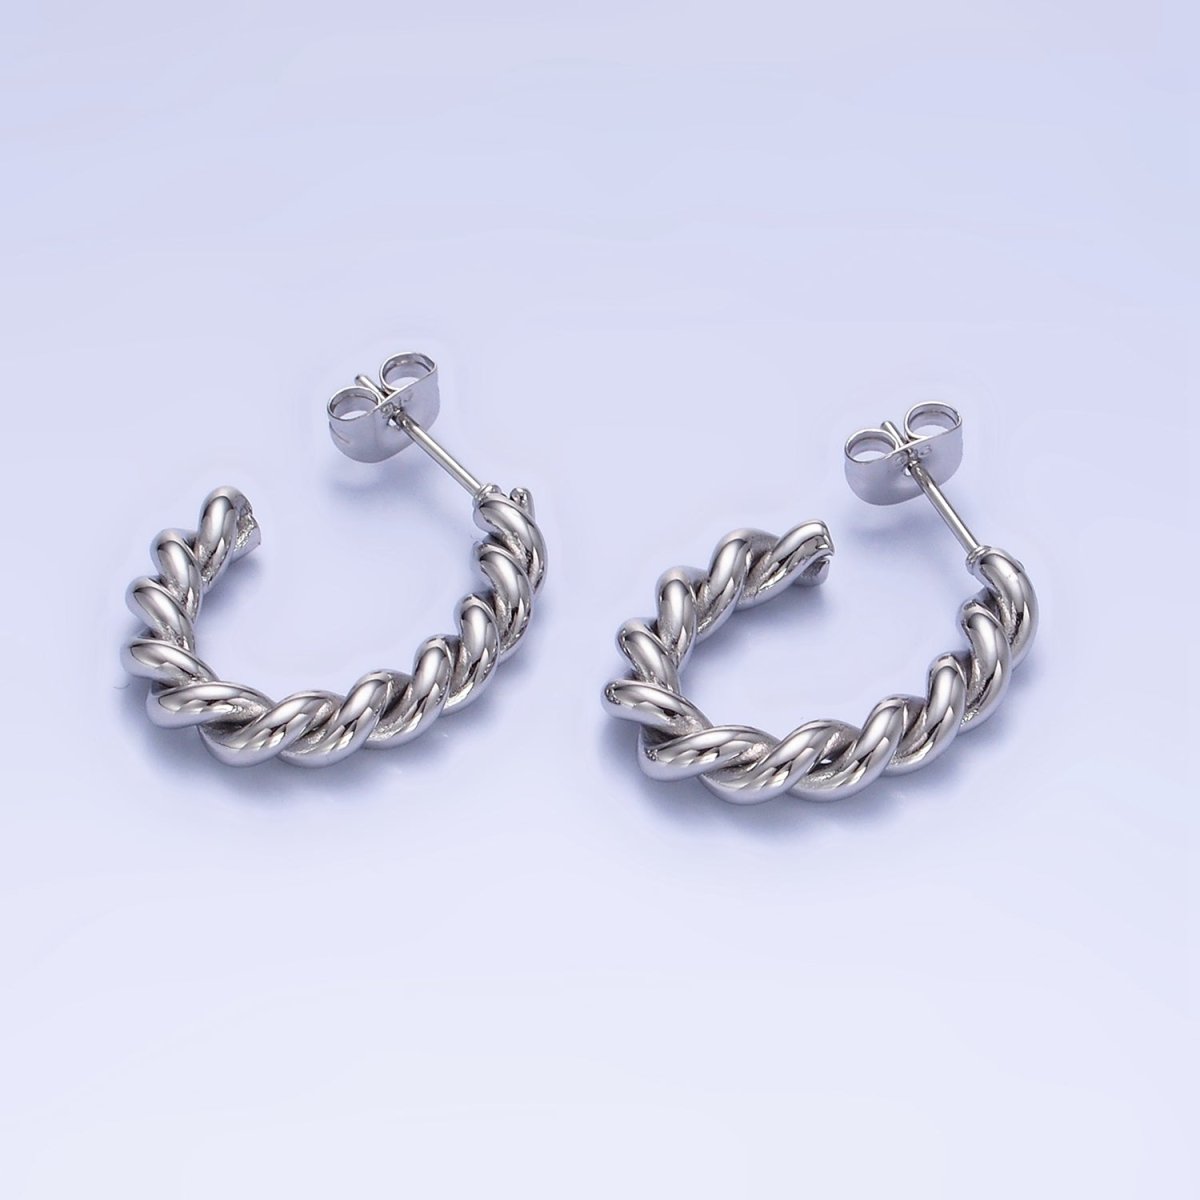 Stainless Steel 25mm Rope Croissant J-Shaped Hoop Earrings in Gold & Silver | P452 P453 - DLUXCA